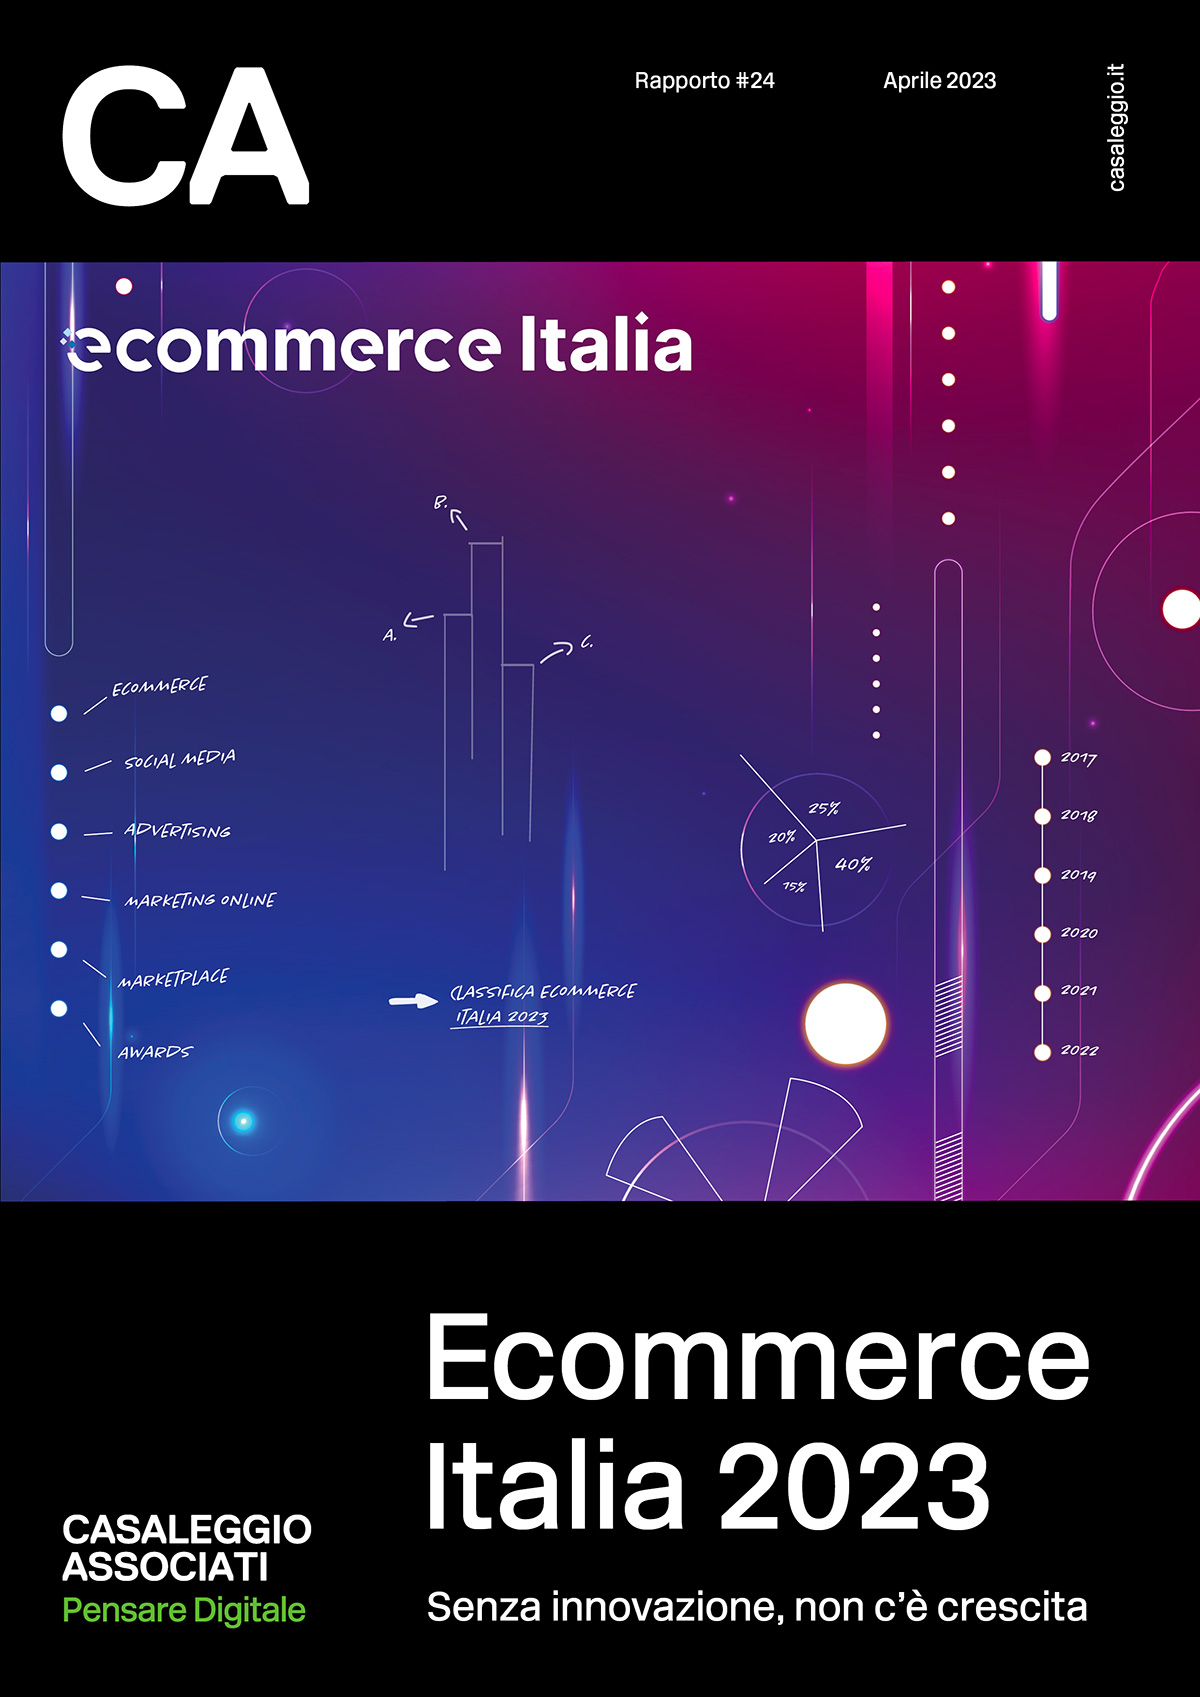 Ecommerce Italia 2023 - Report